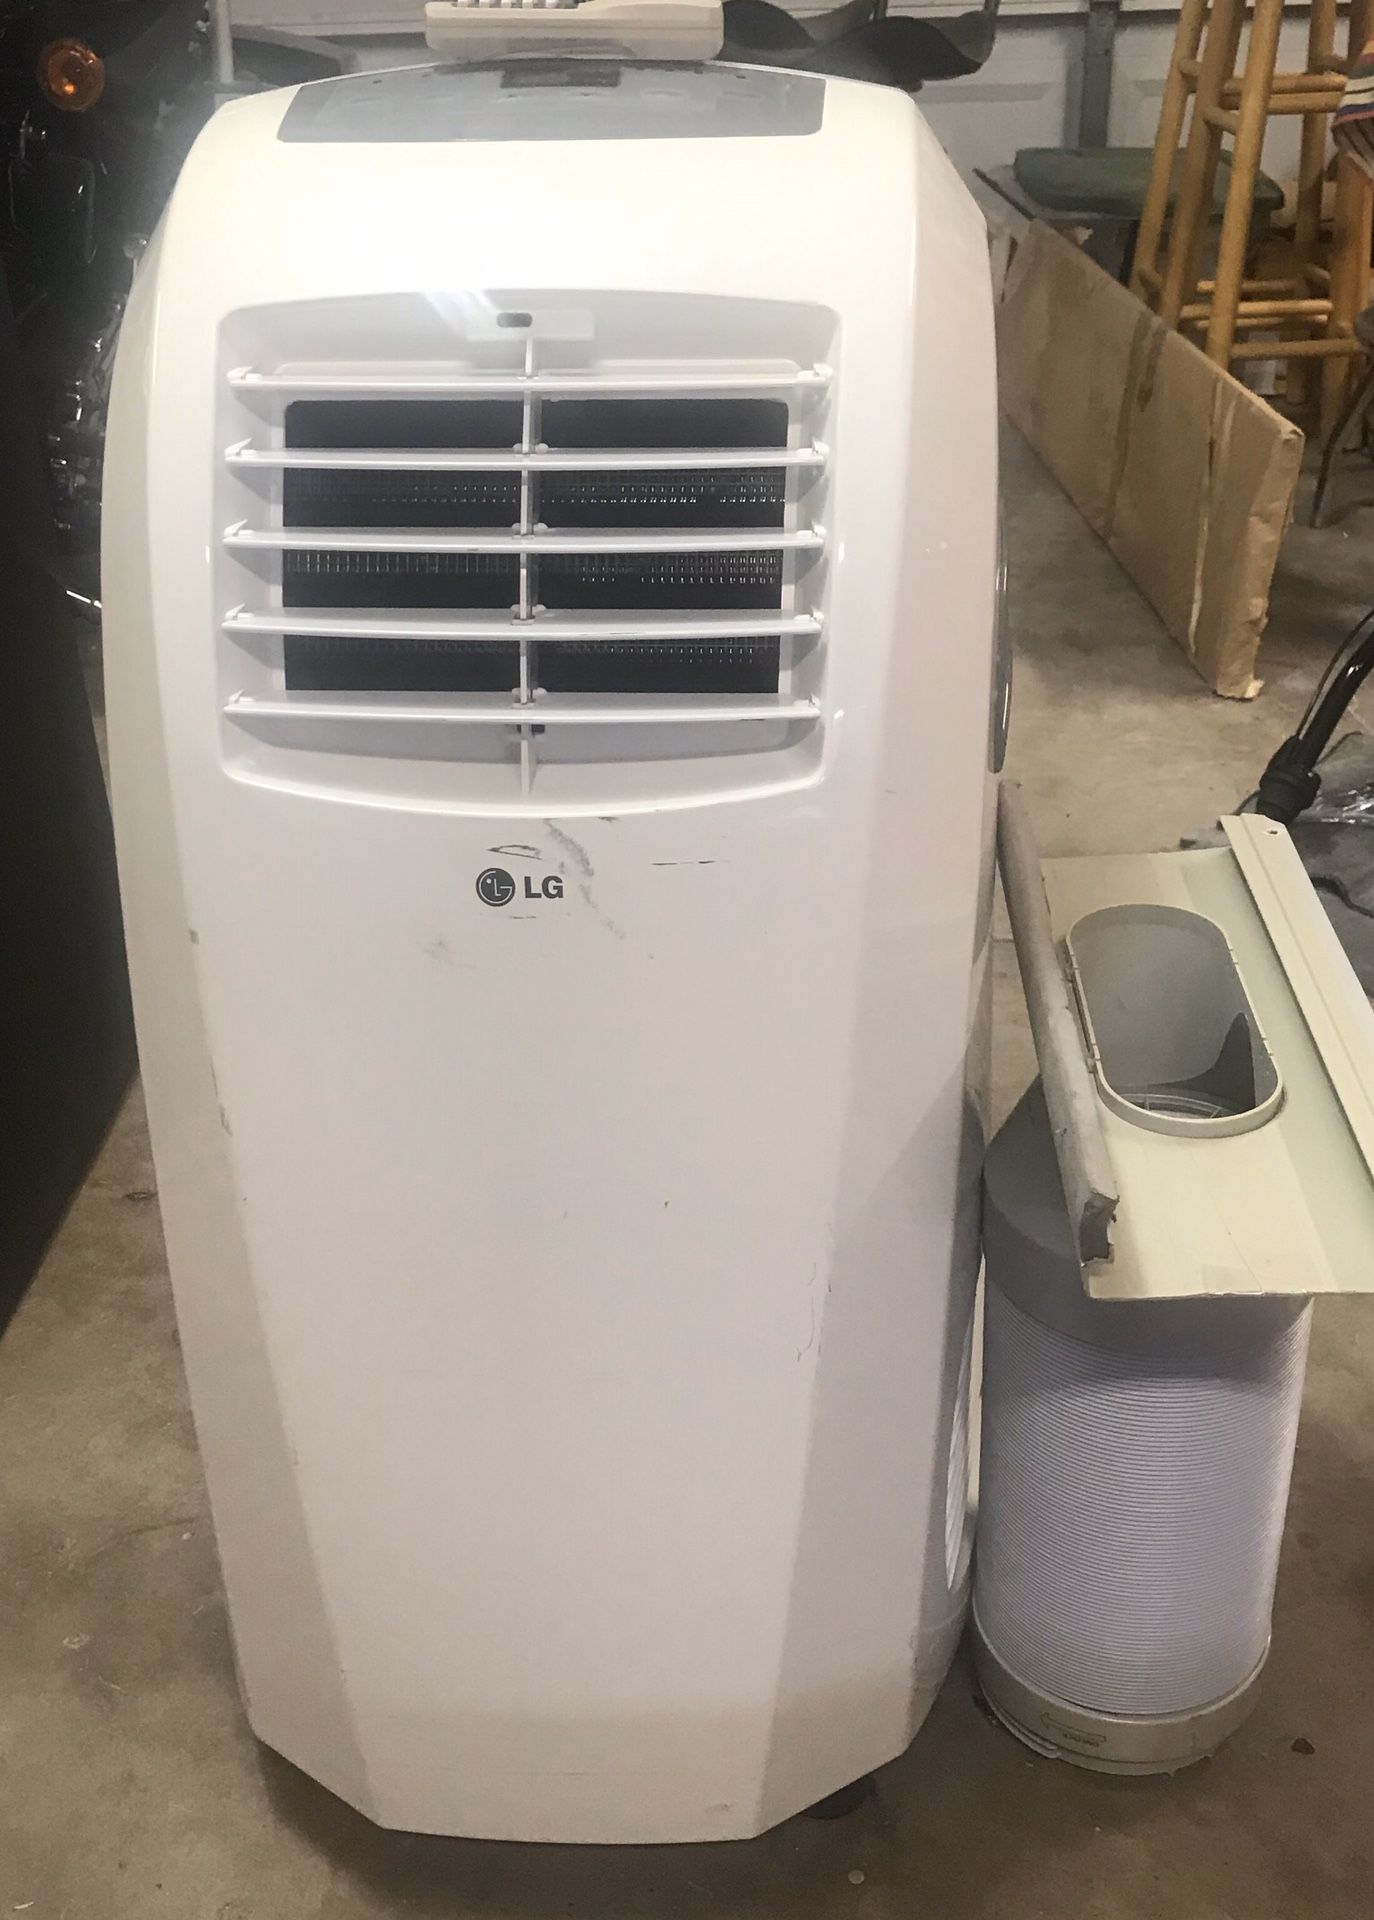 LG LP0910WNR 9,000 BTU Portable Air Conditioner with remote